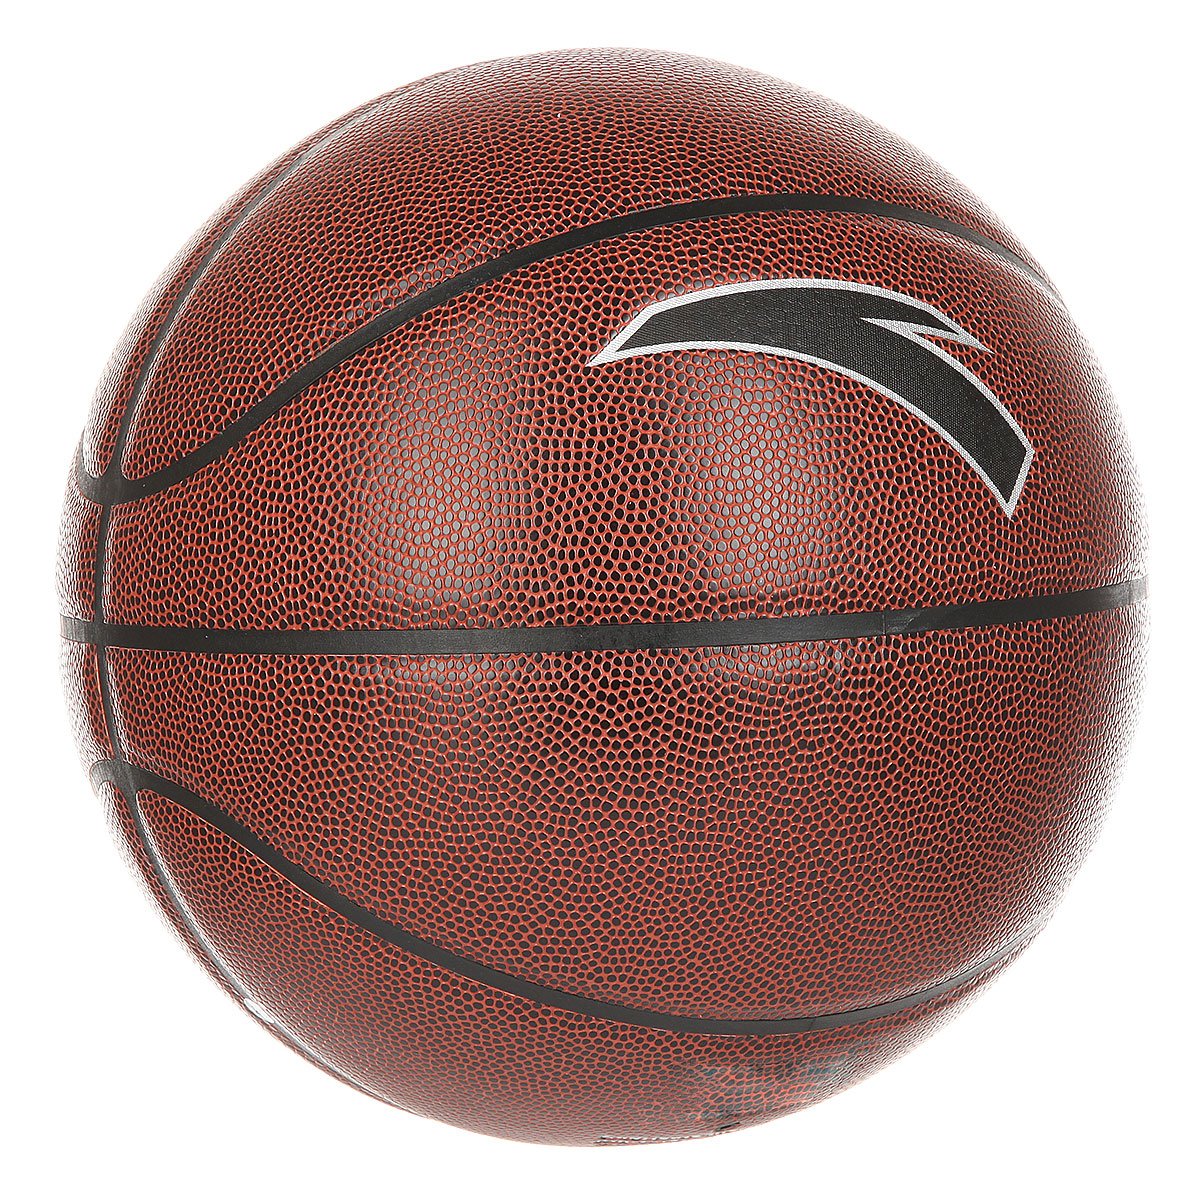 Russell Athletic баскетбольный мяч